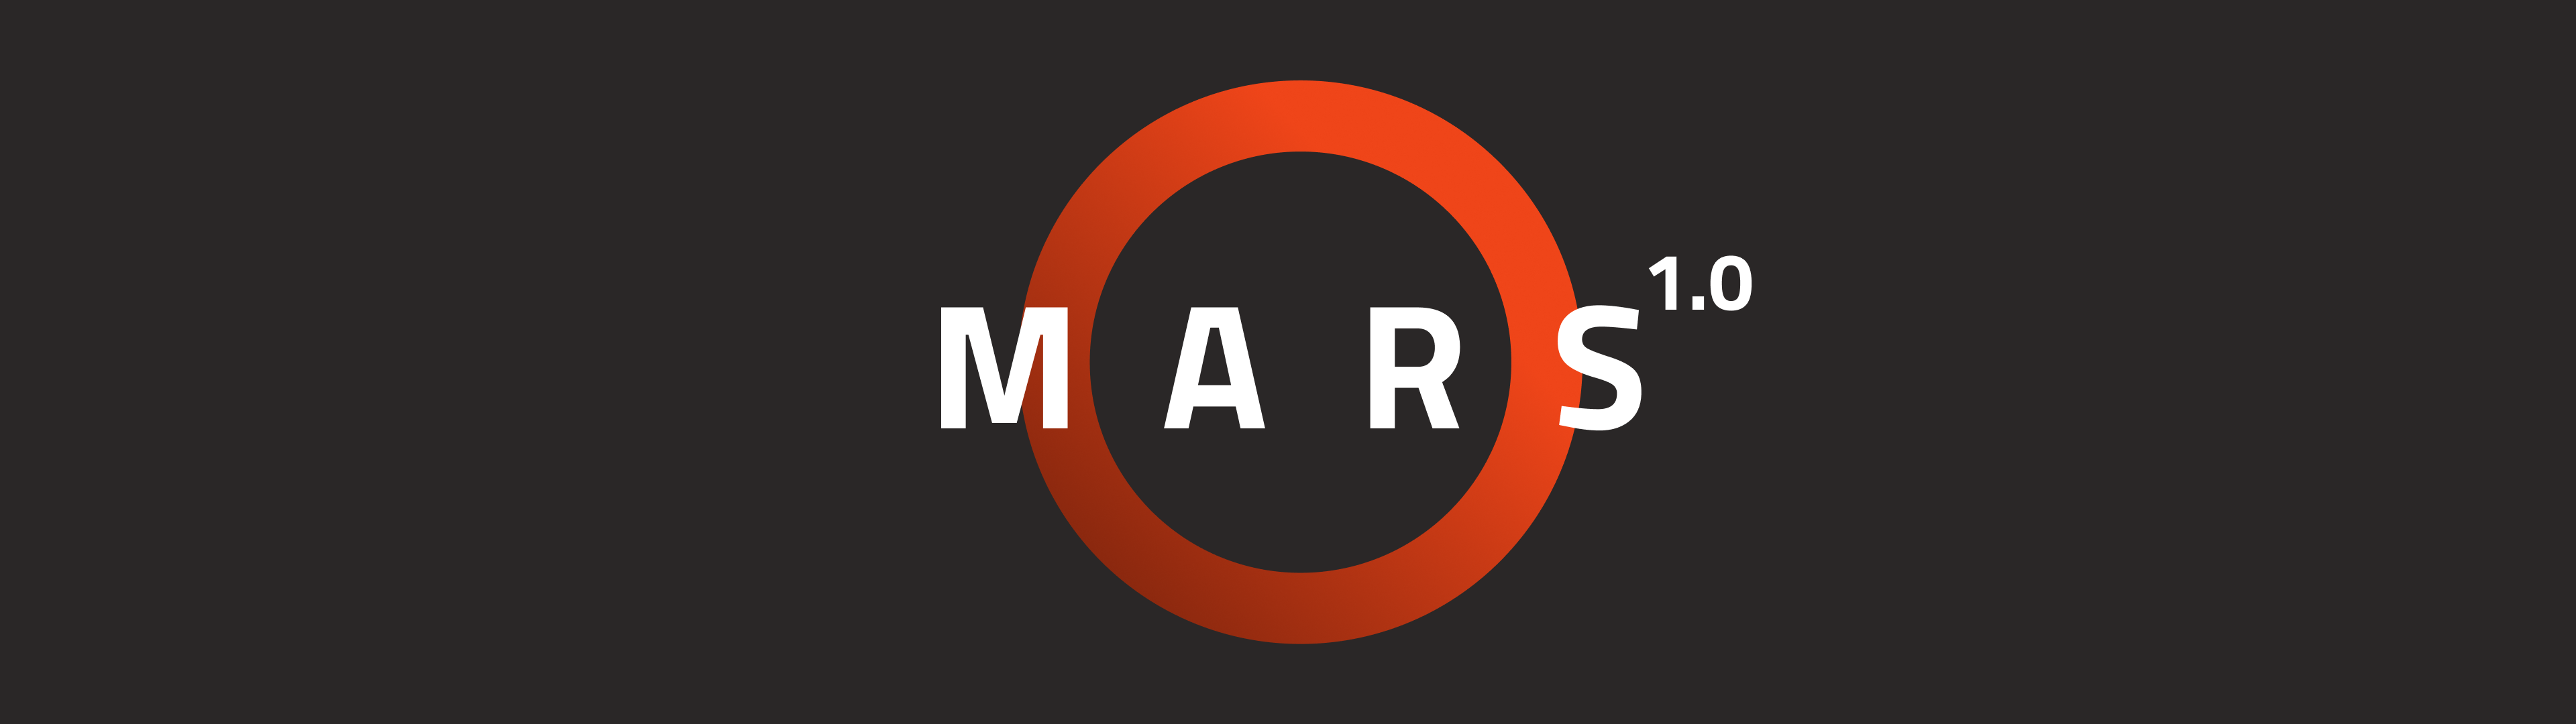 MARS-1.0.png